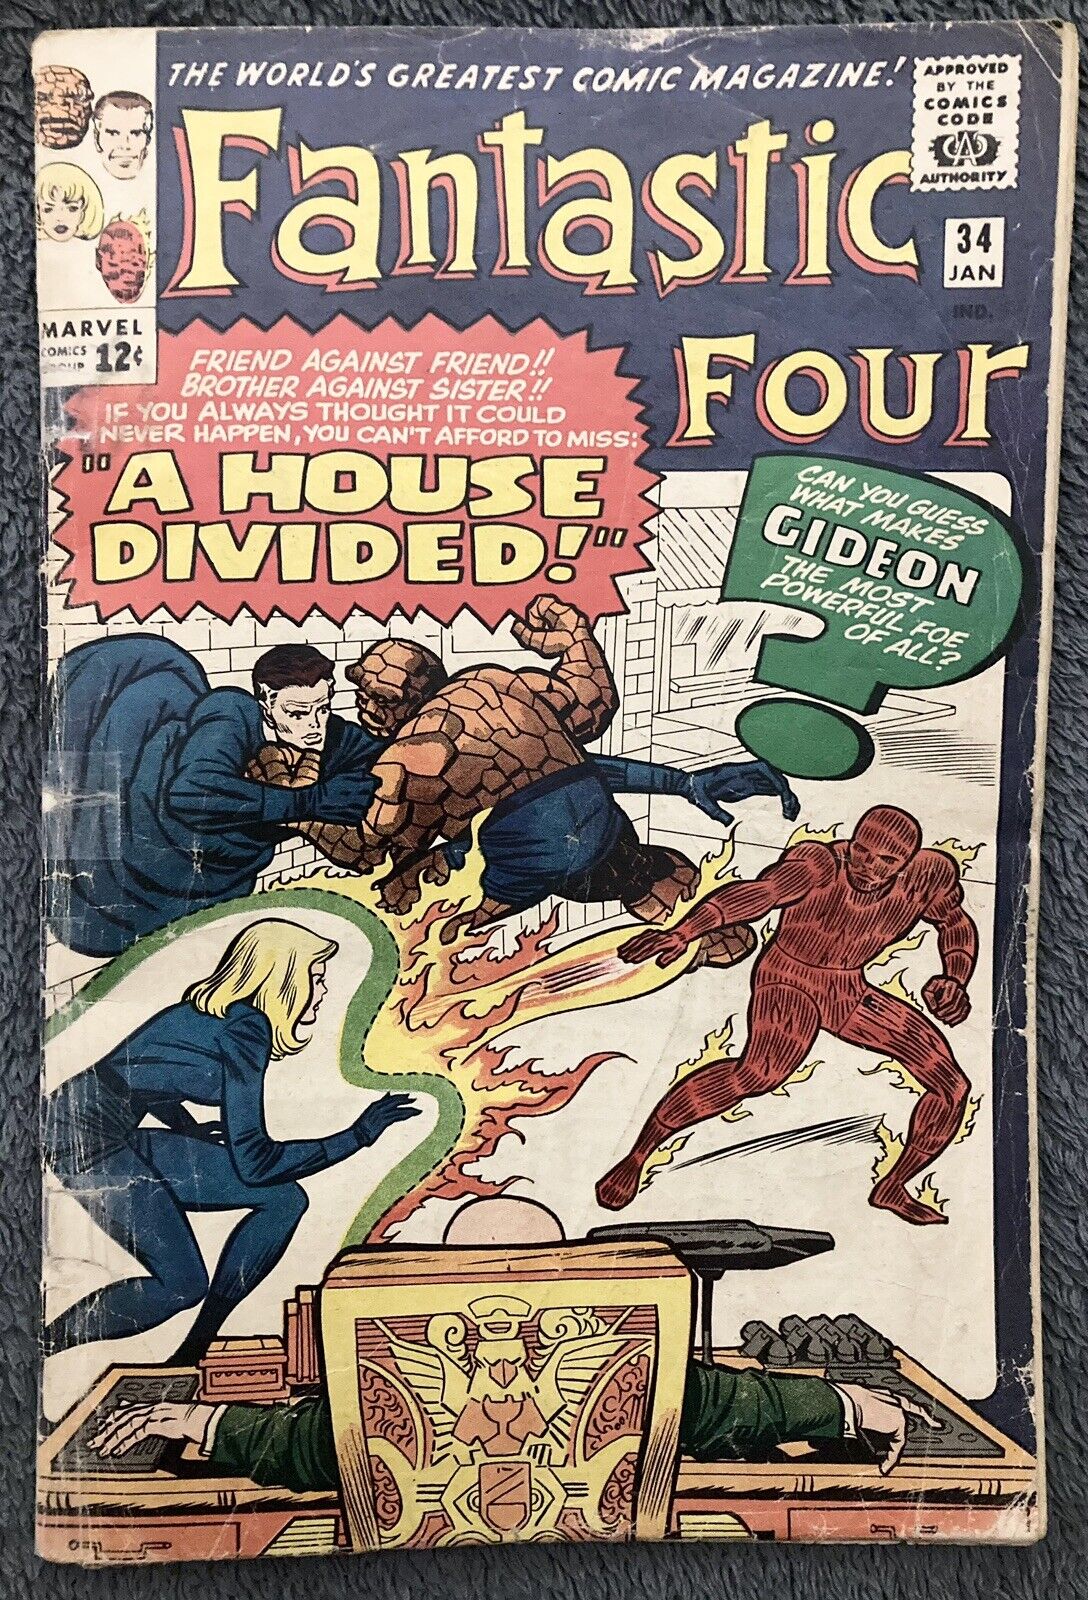 Fantastic Four #34 Jan 1965 Marvel Comics Vintage 1960s Comic Book